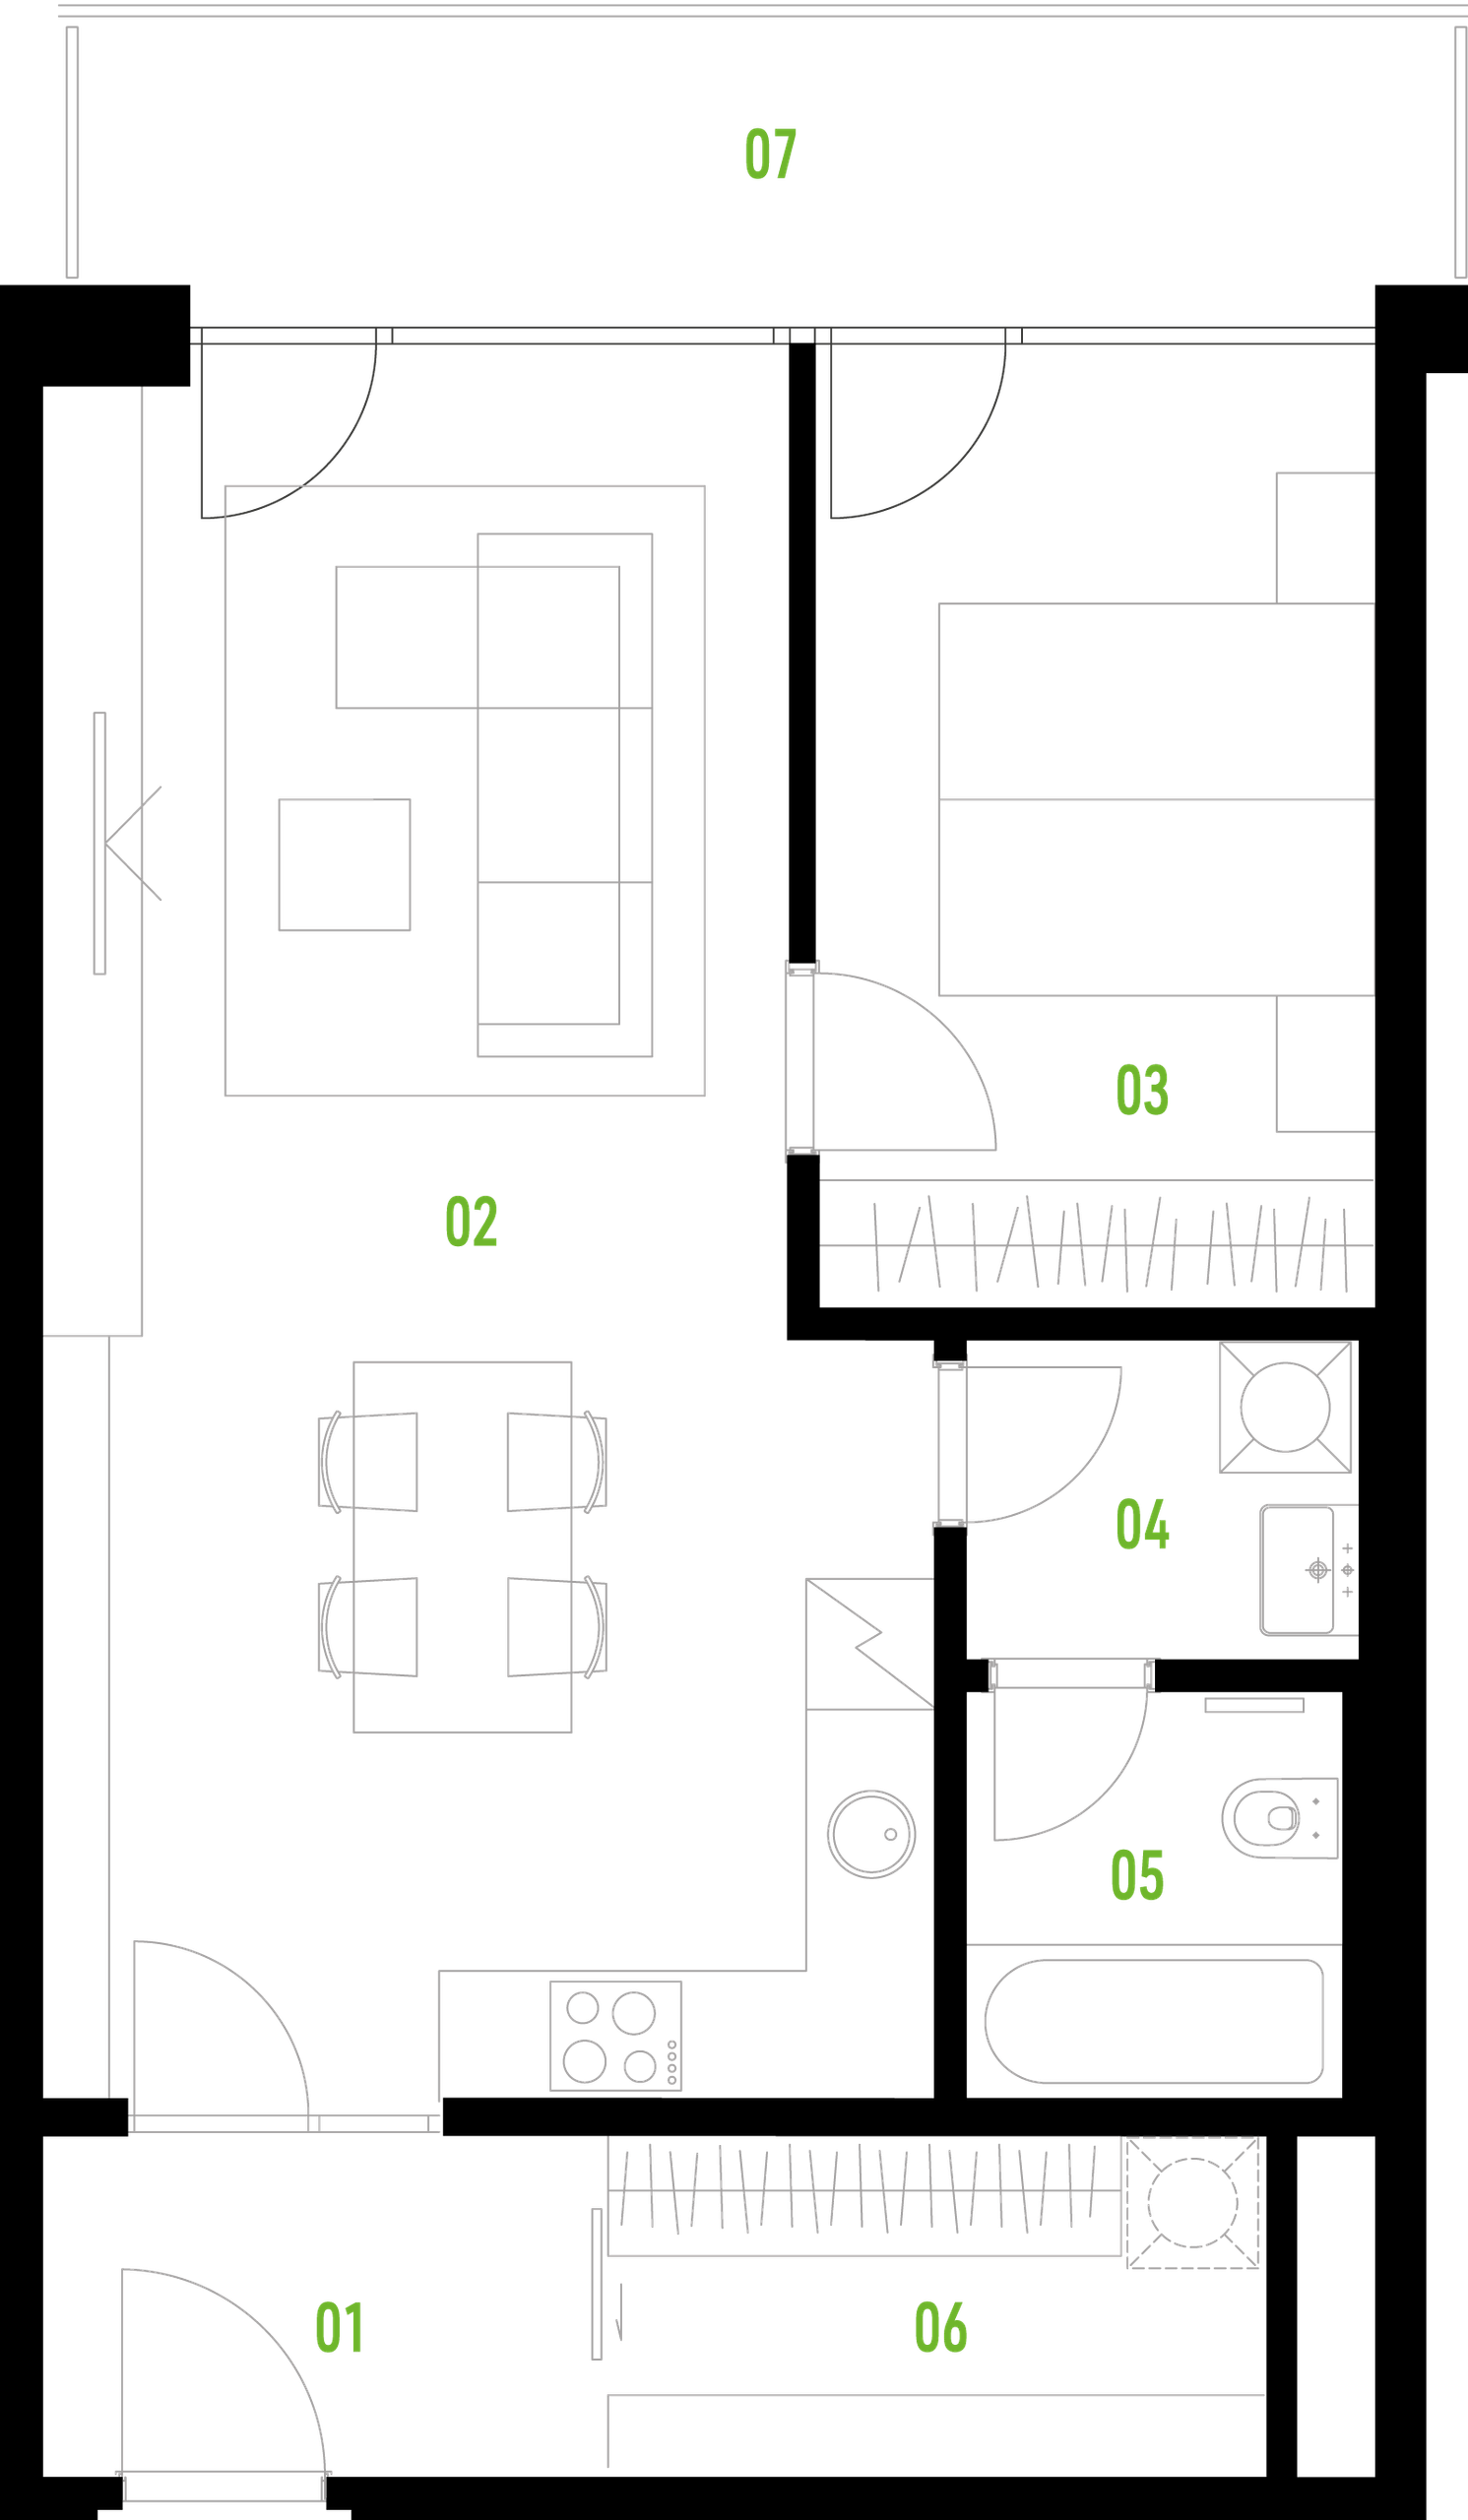 A33 floor plan